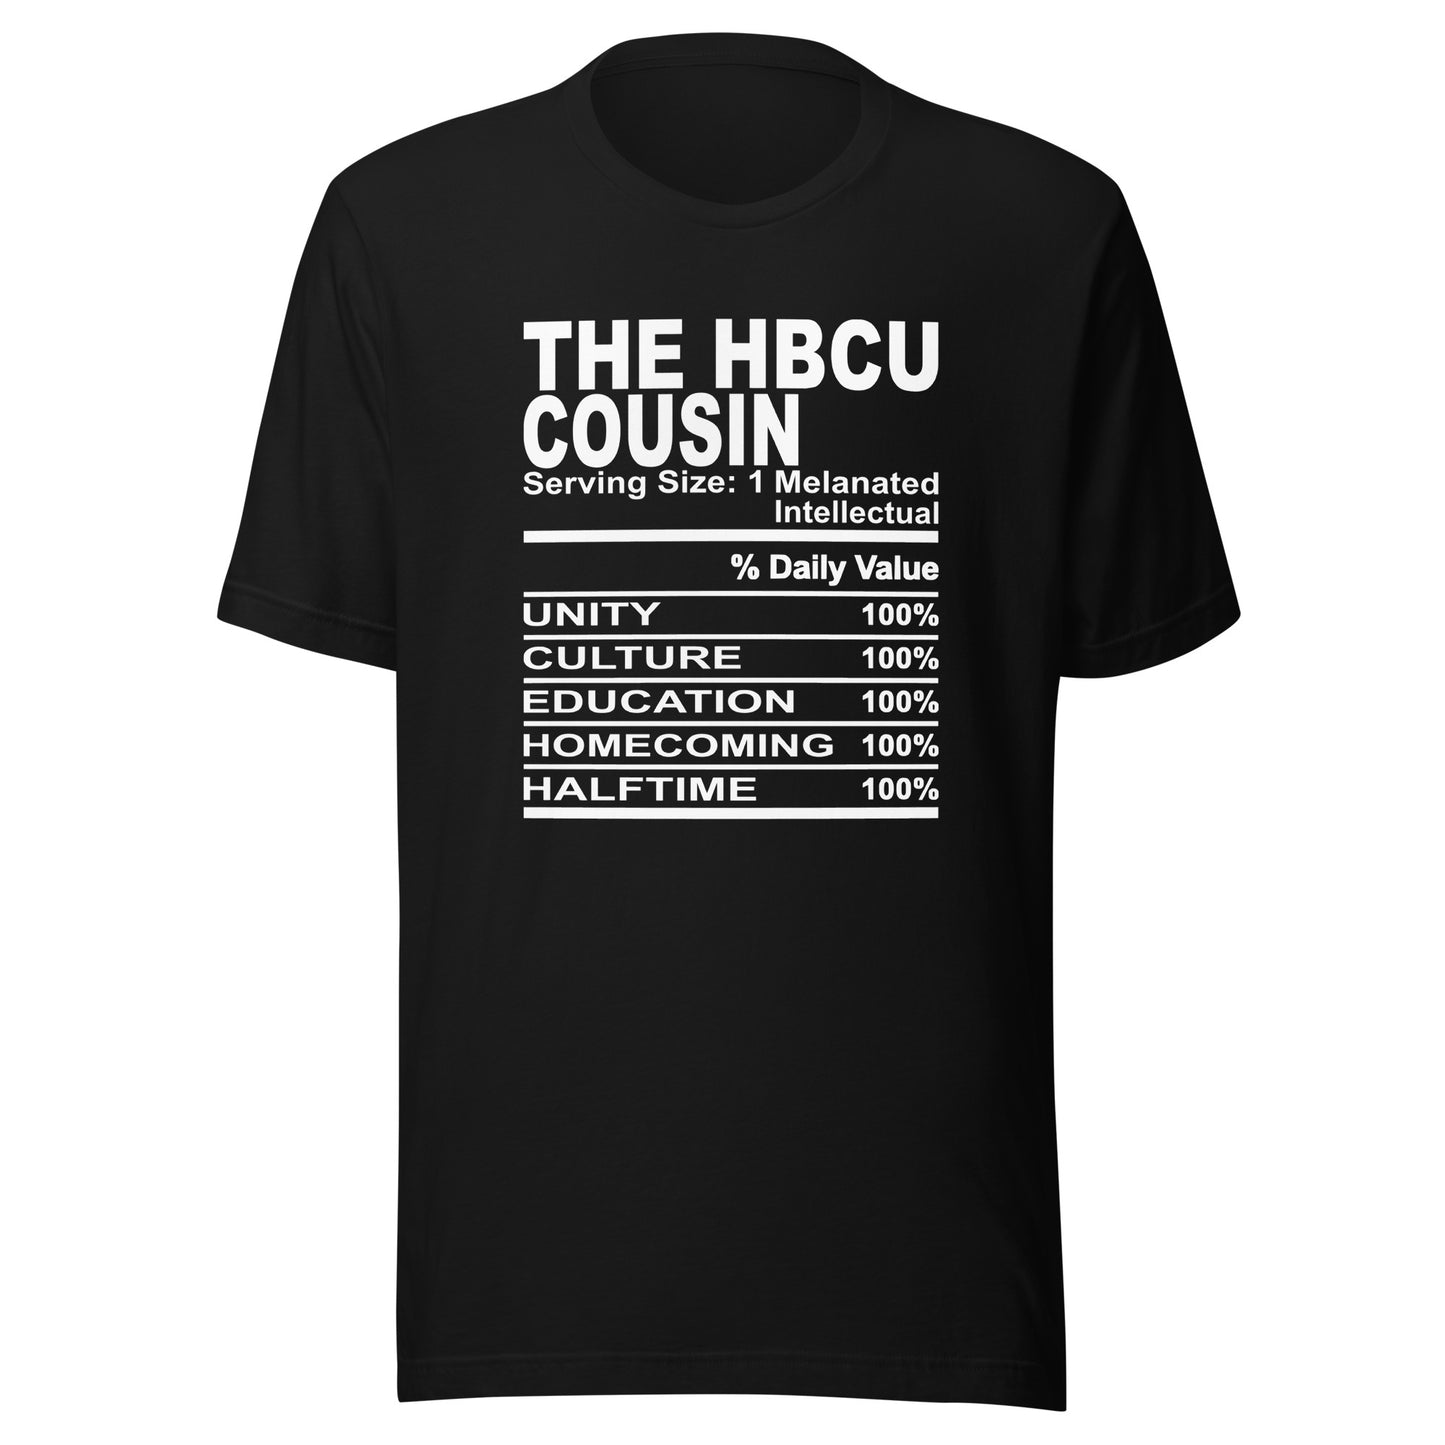 THE HBCU COUSIN - 2XL-3XL - Unisex T-Shirt (white print)